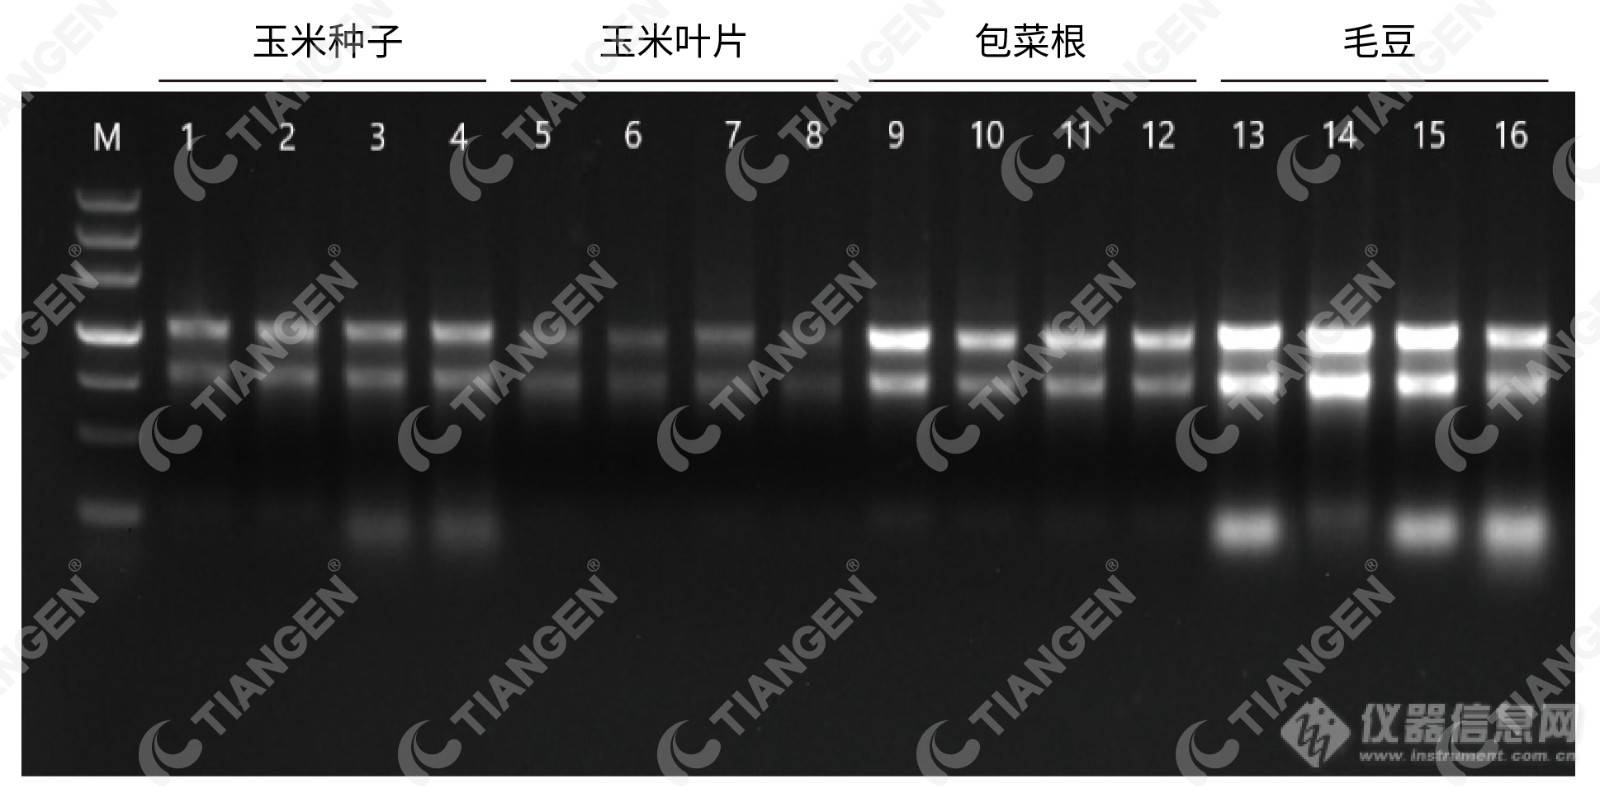 S16推送-7 植物RNA.jpg